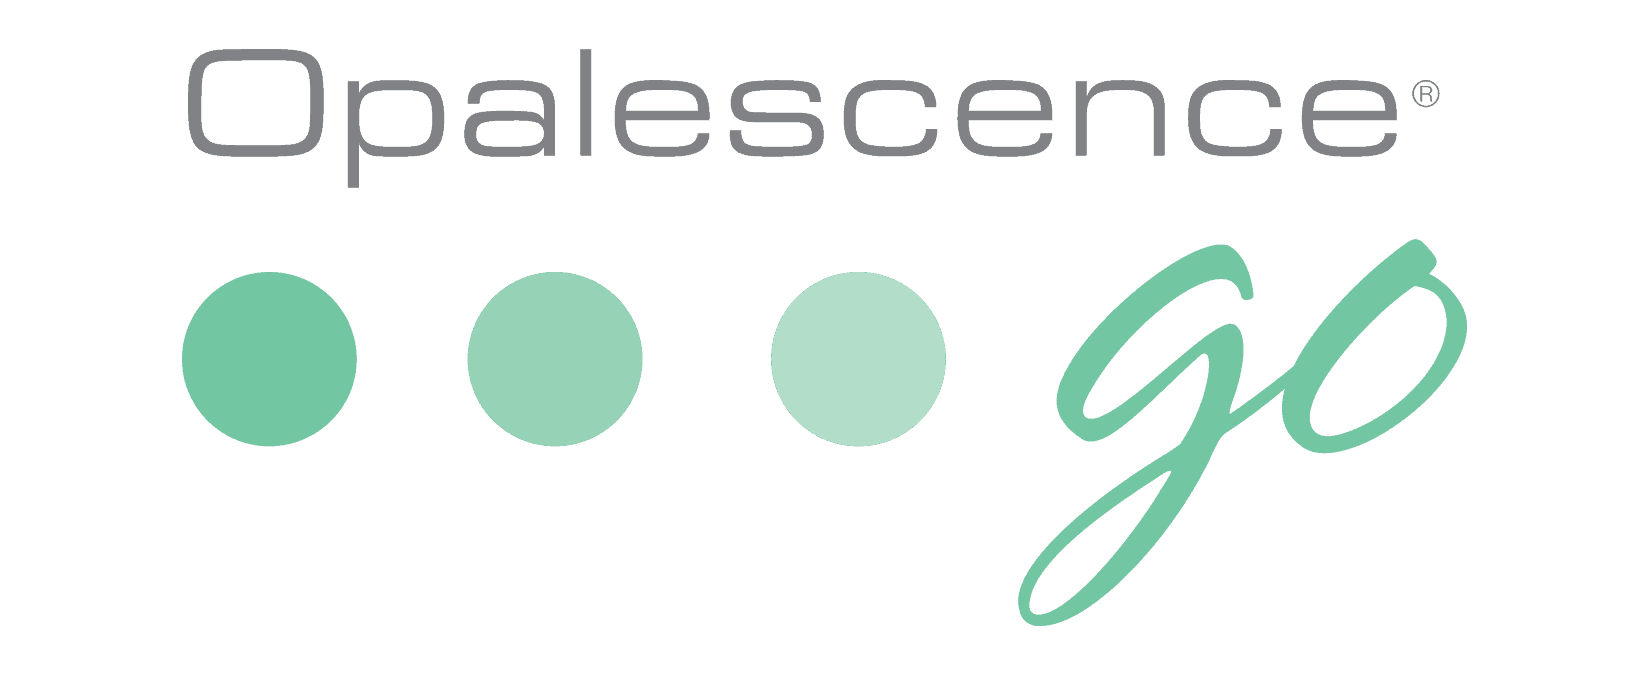 Opalescence Go logo